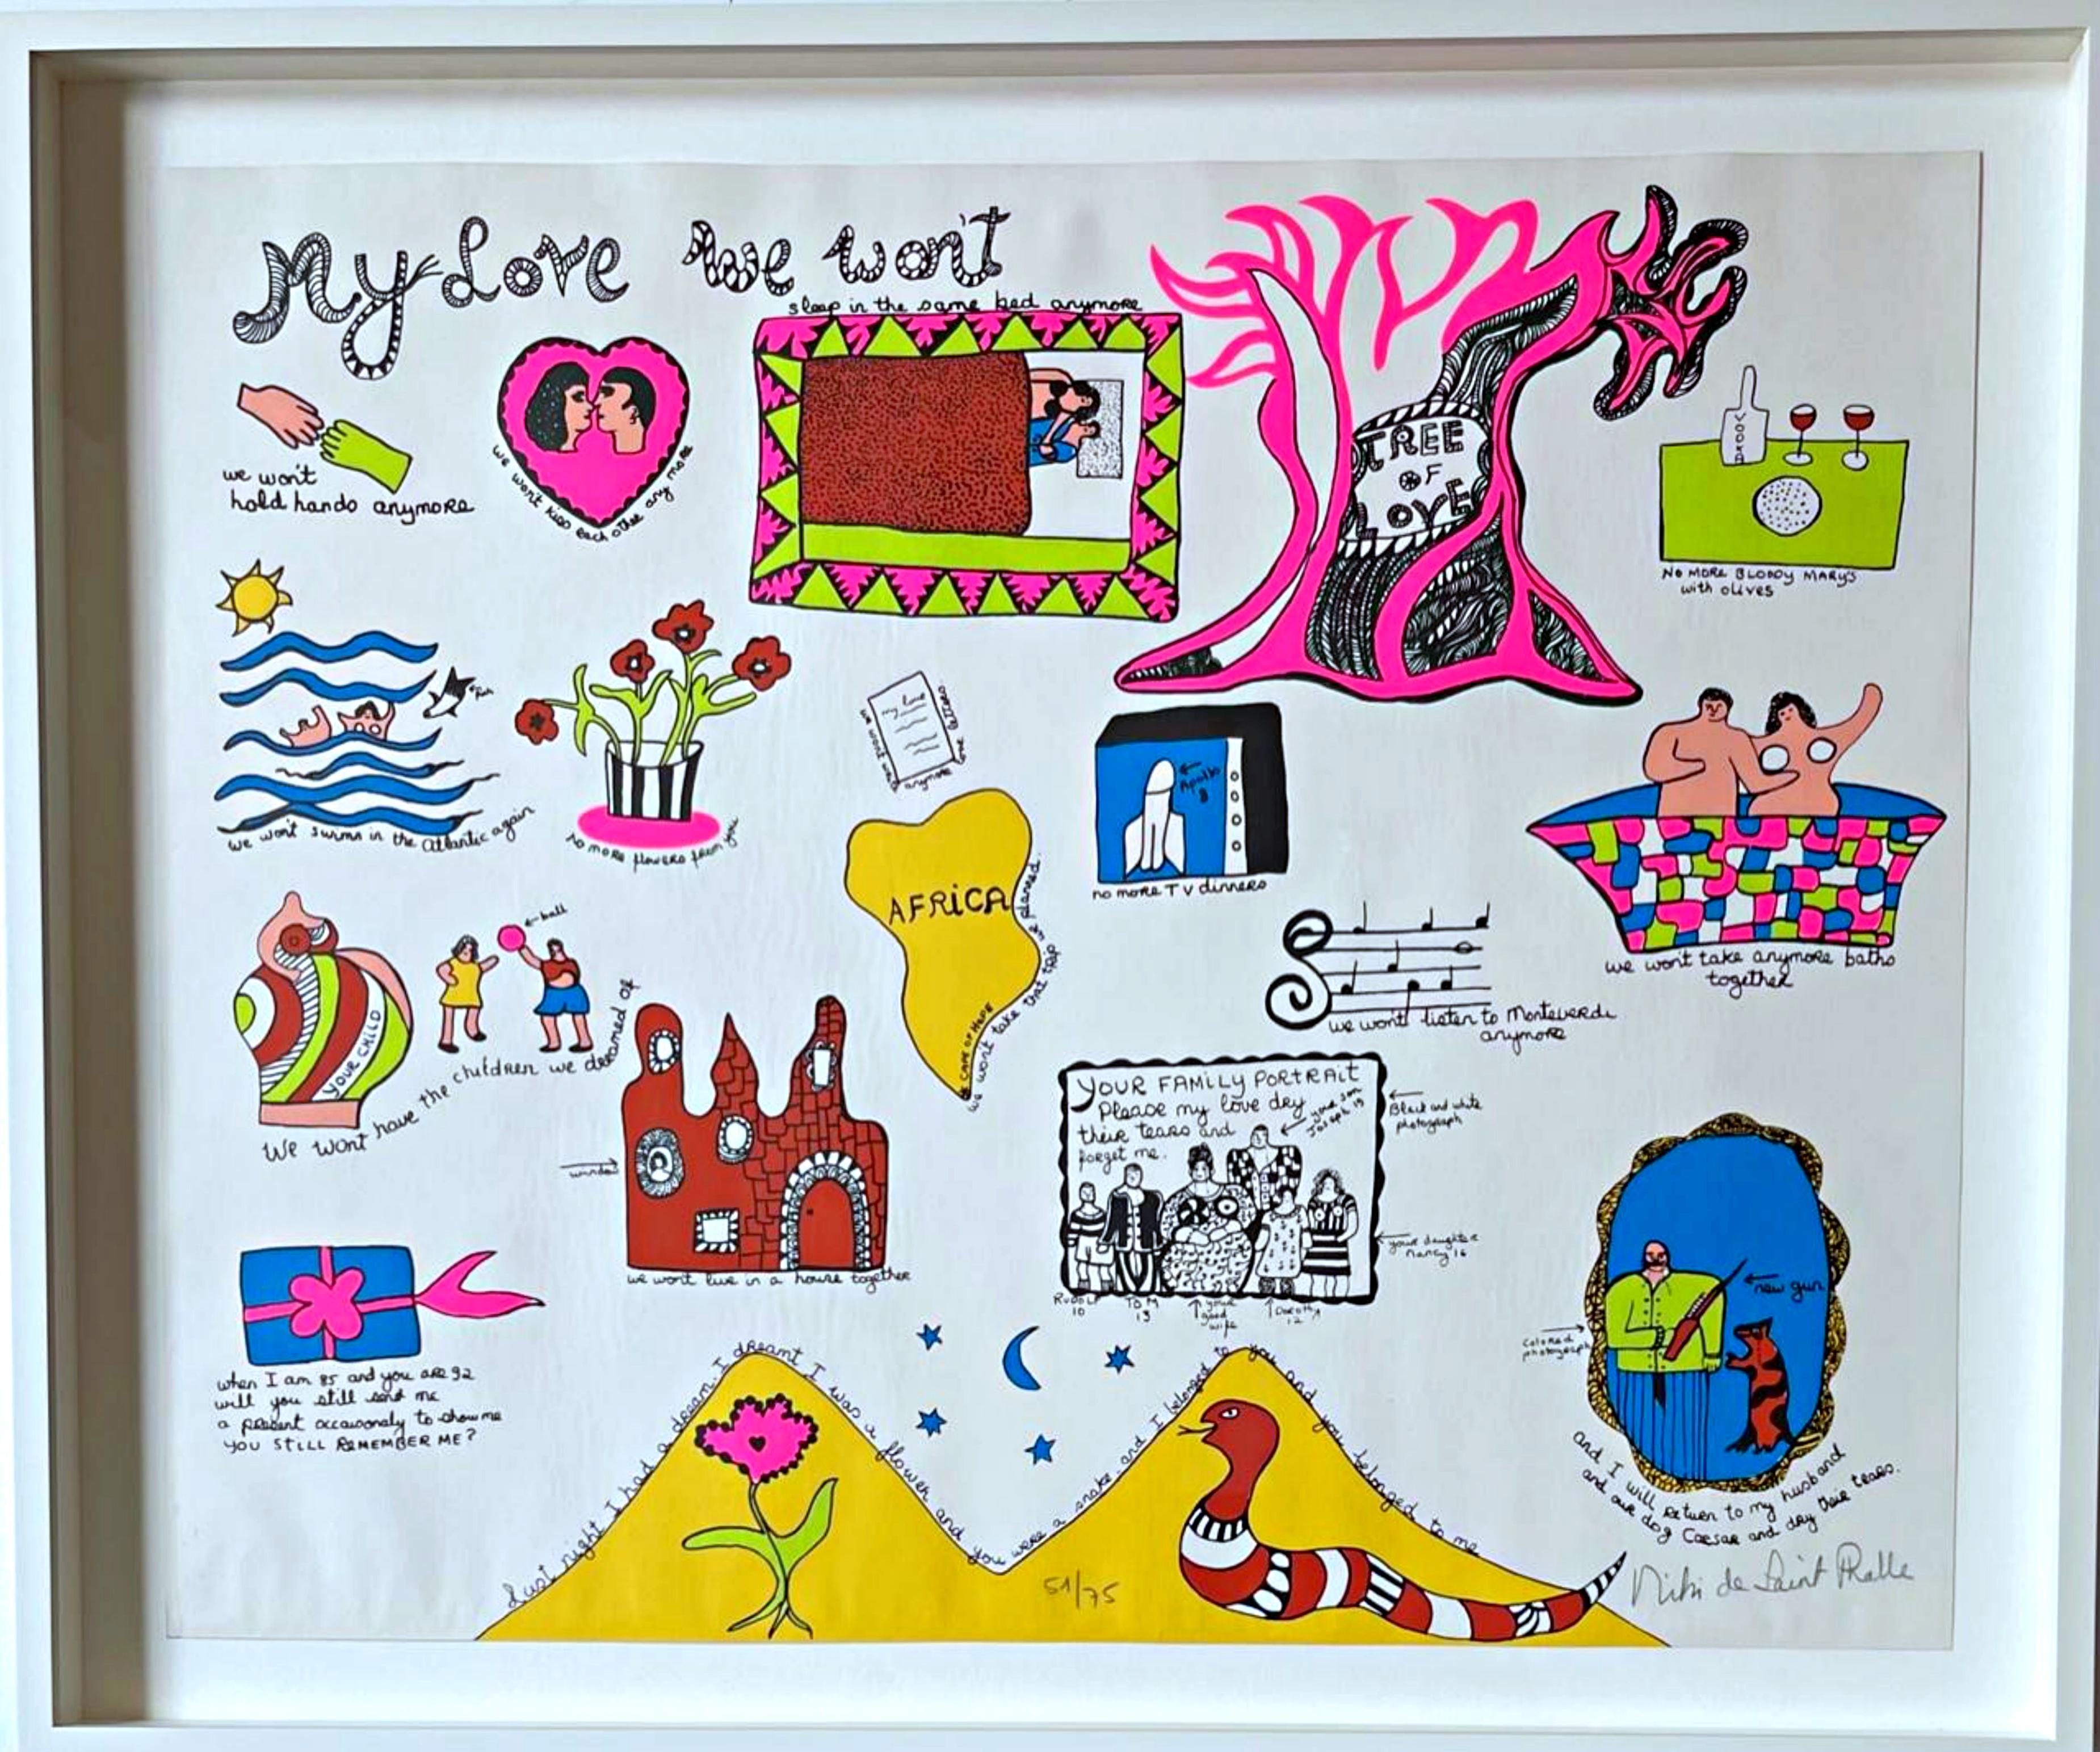 Niki de Saint Phalle Abstract Print - My Love We Wont - coveted, whimsical 1960s silkscreen by beloved female artist 